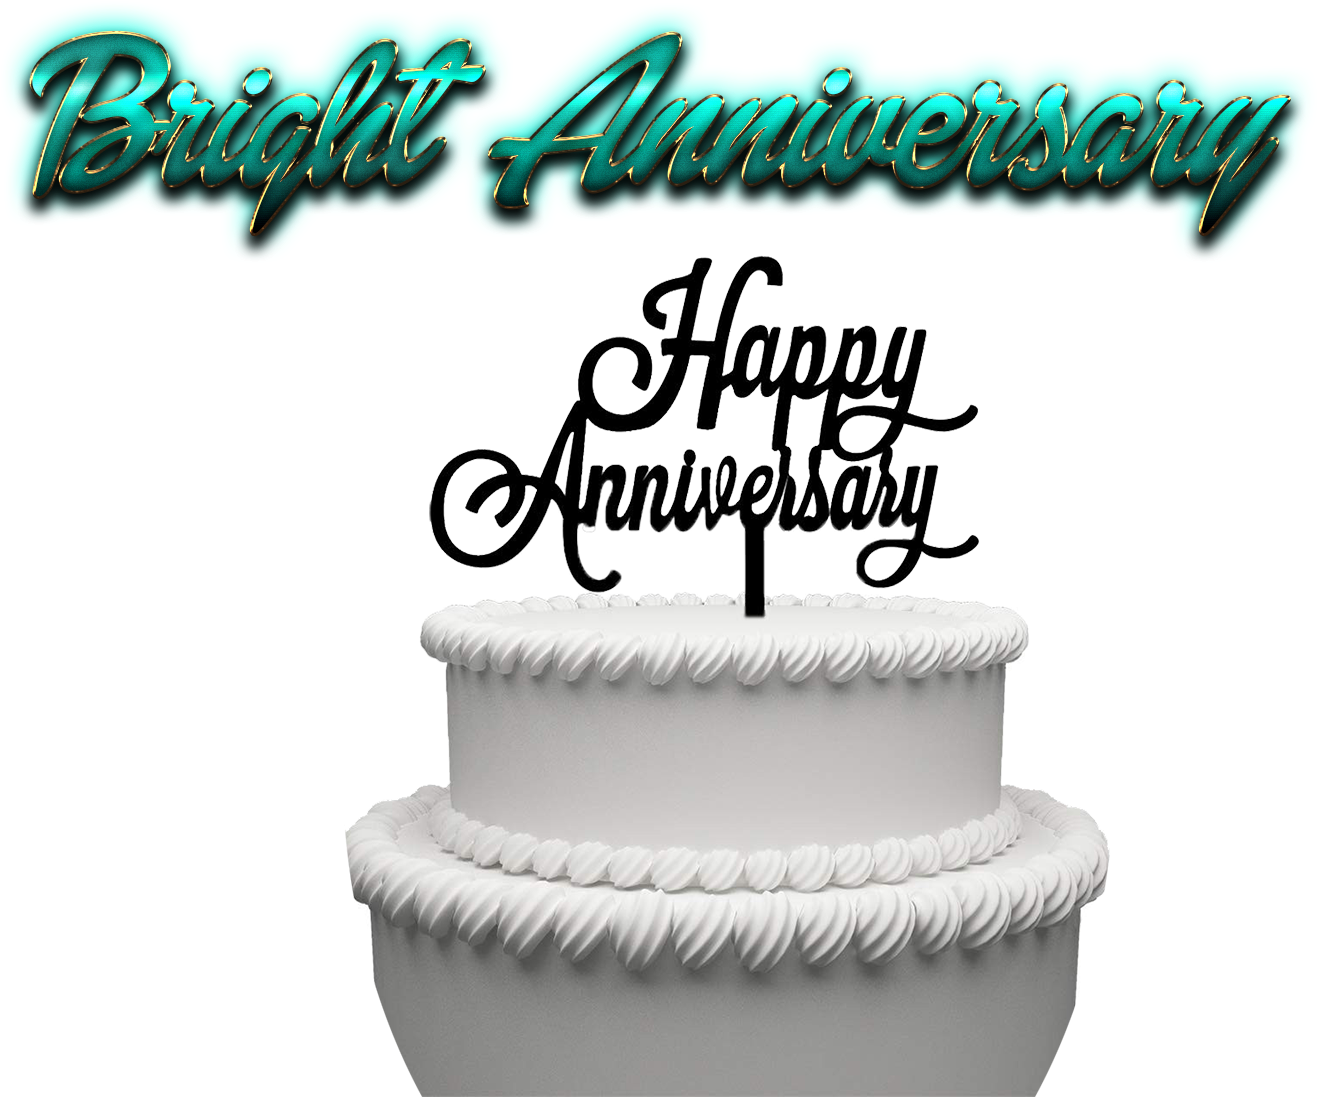 Bright Anniversary Celebration Cake PNG image